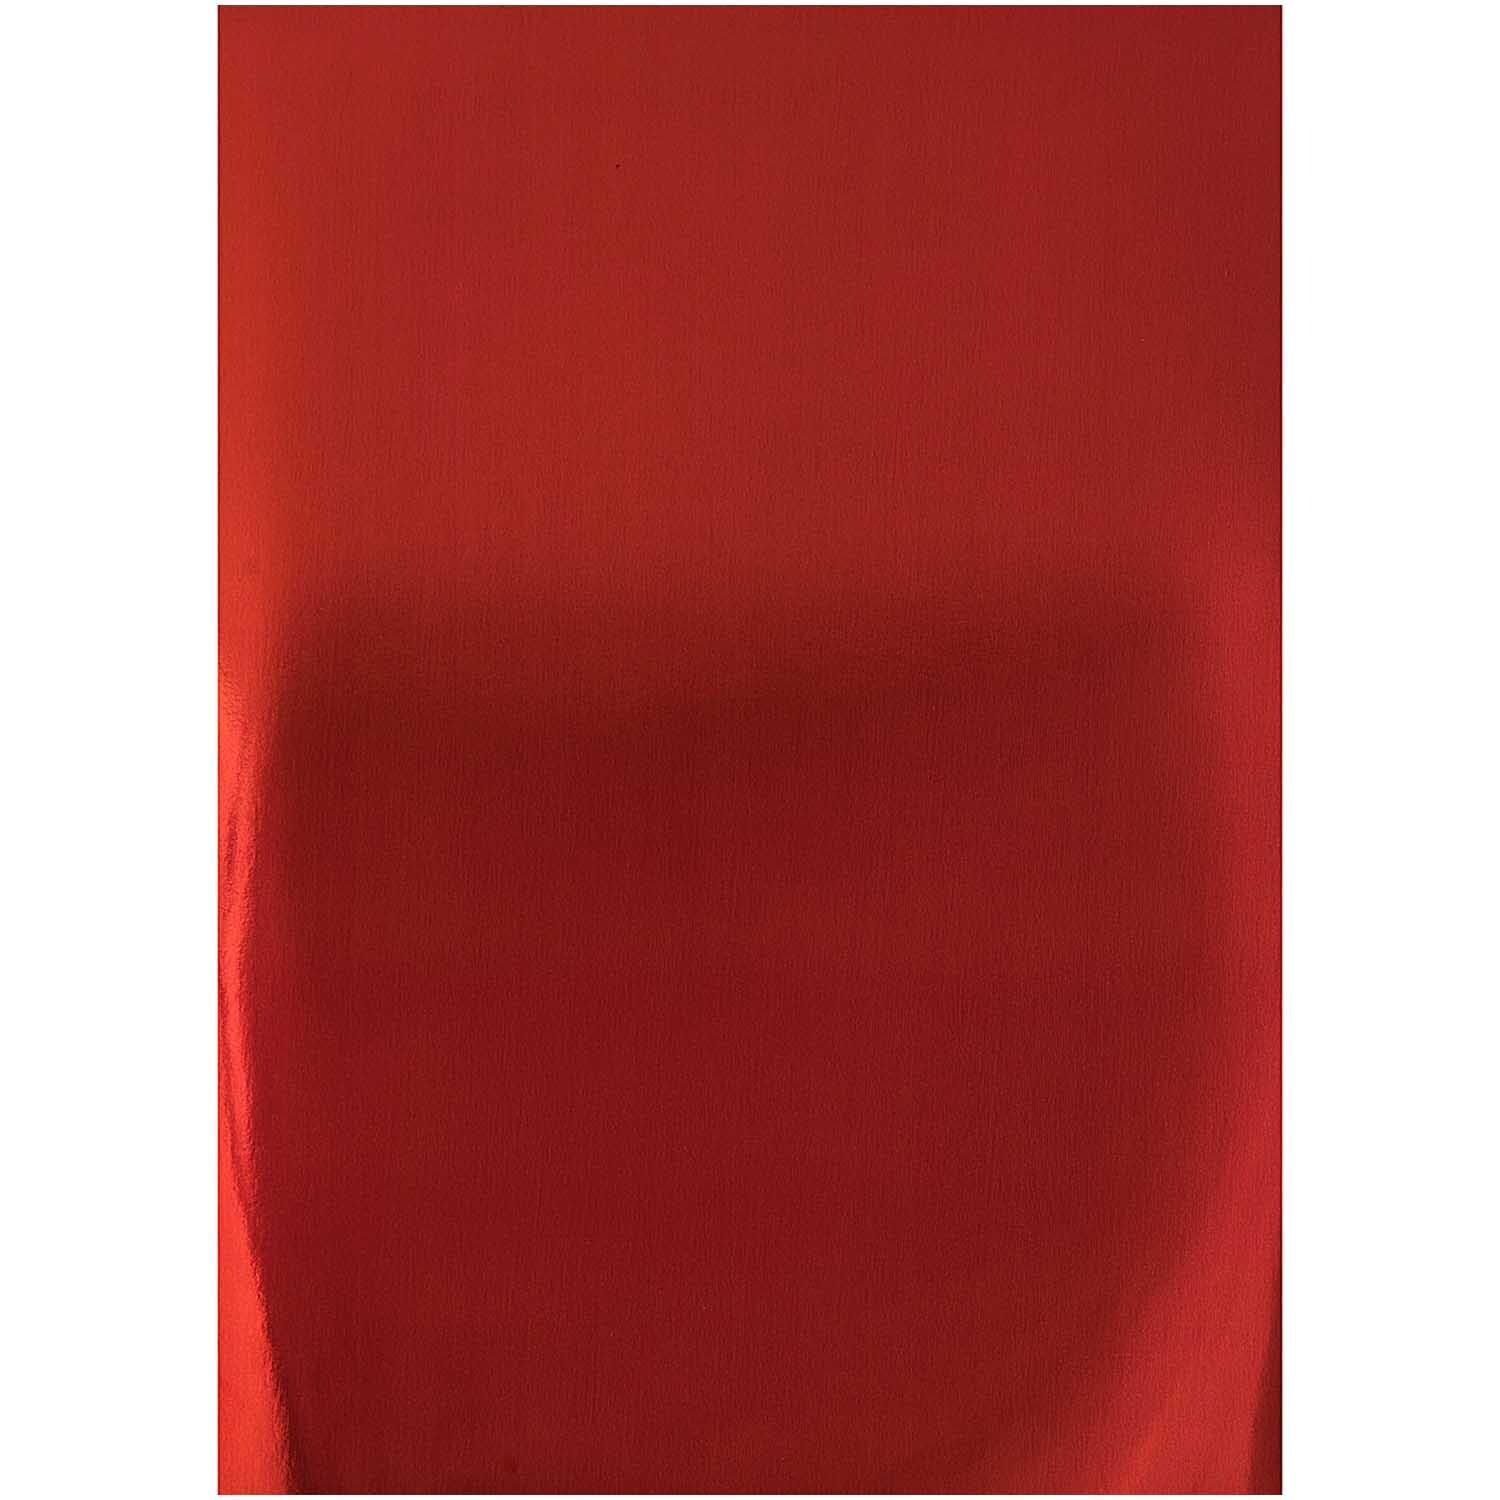 Paper Poetry Spiegelkartonblock rot-grün 21x29,5cm 230g/m² 12 Blatt